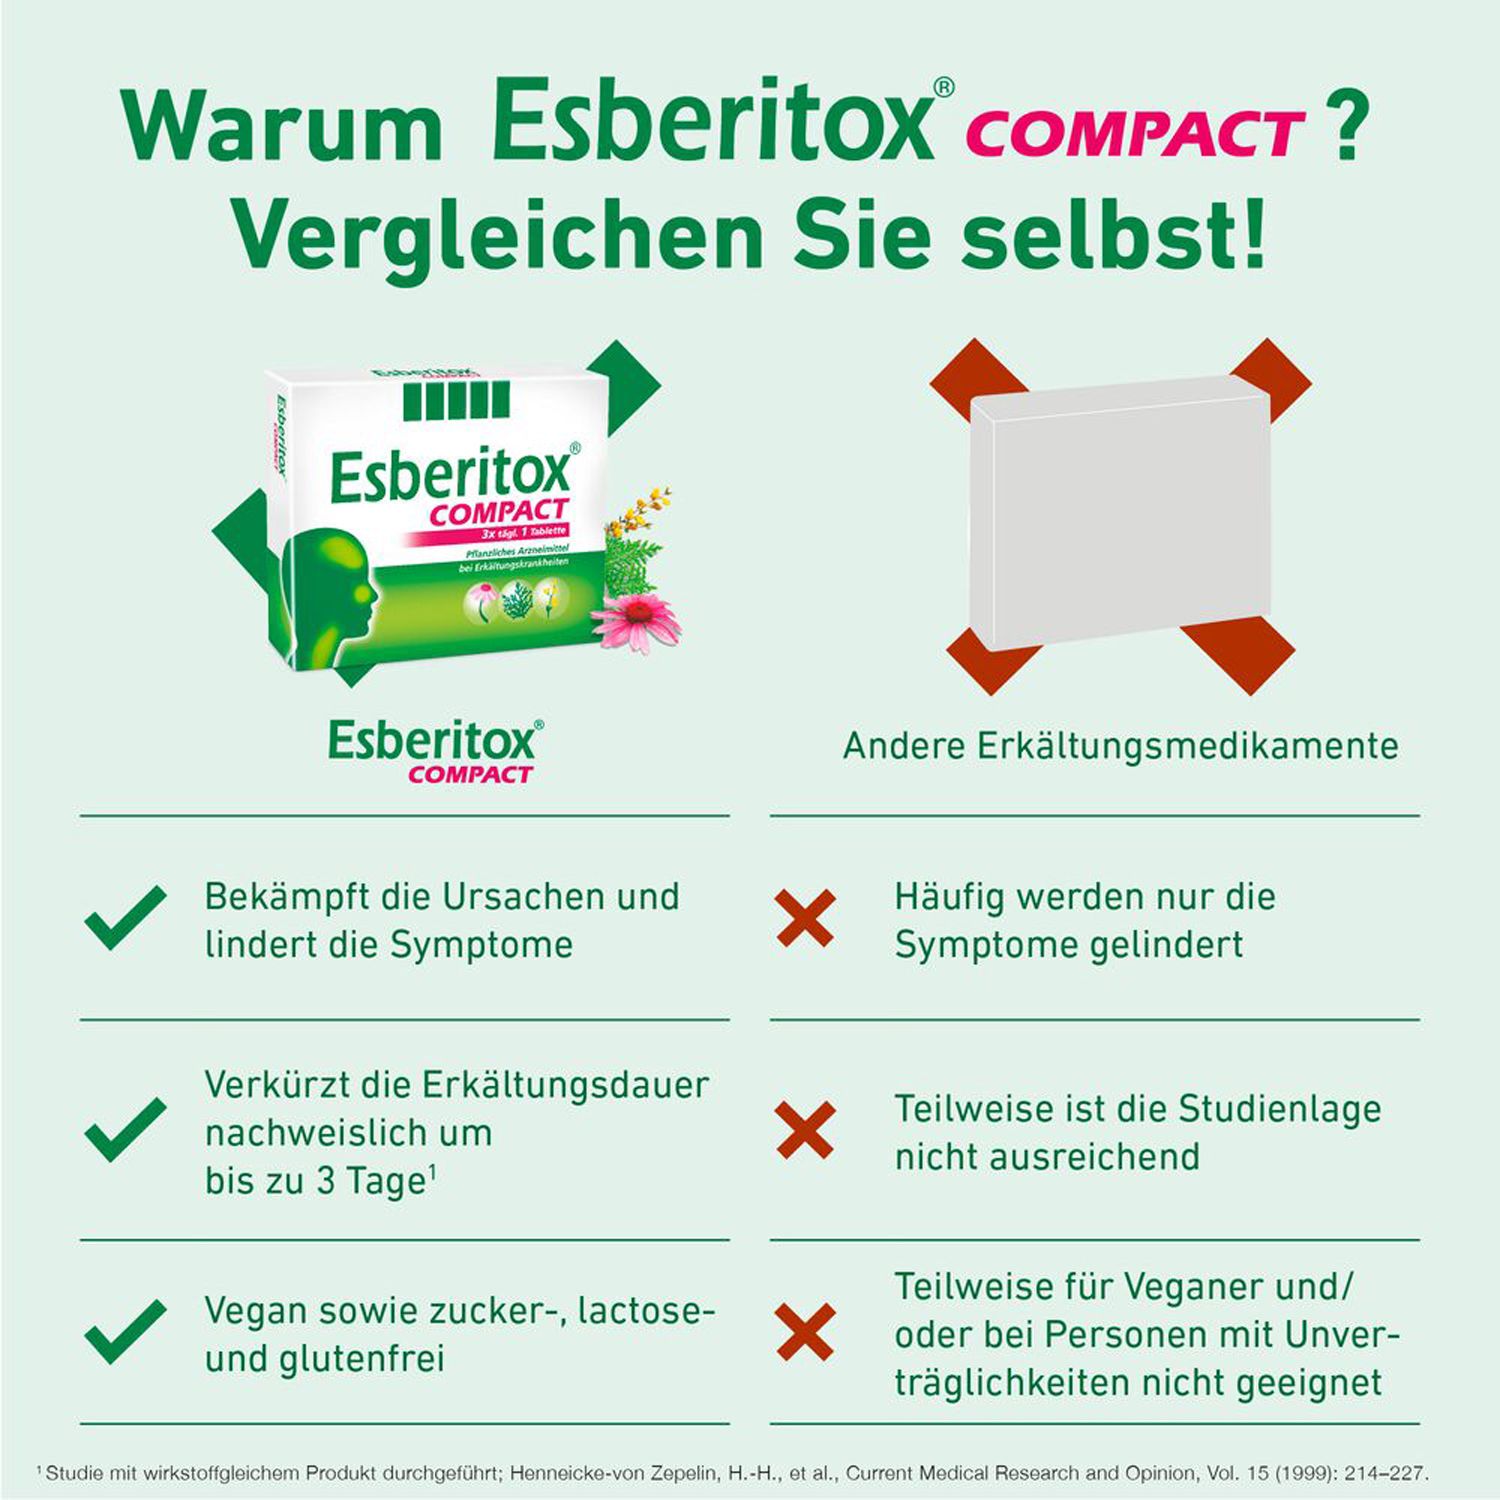 Esberitox COMPACT Tabletten bei Erkältungskrankheiten